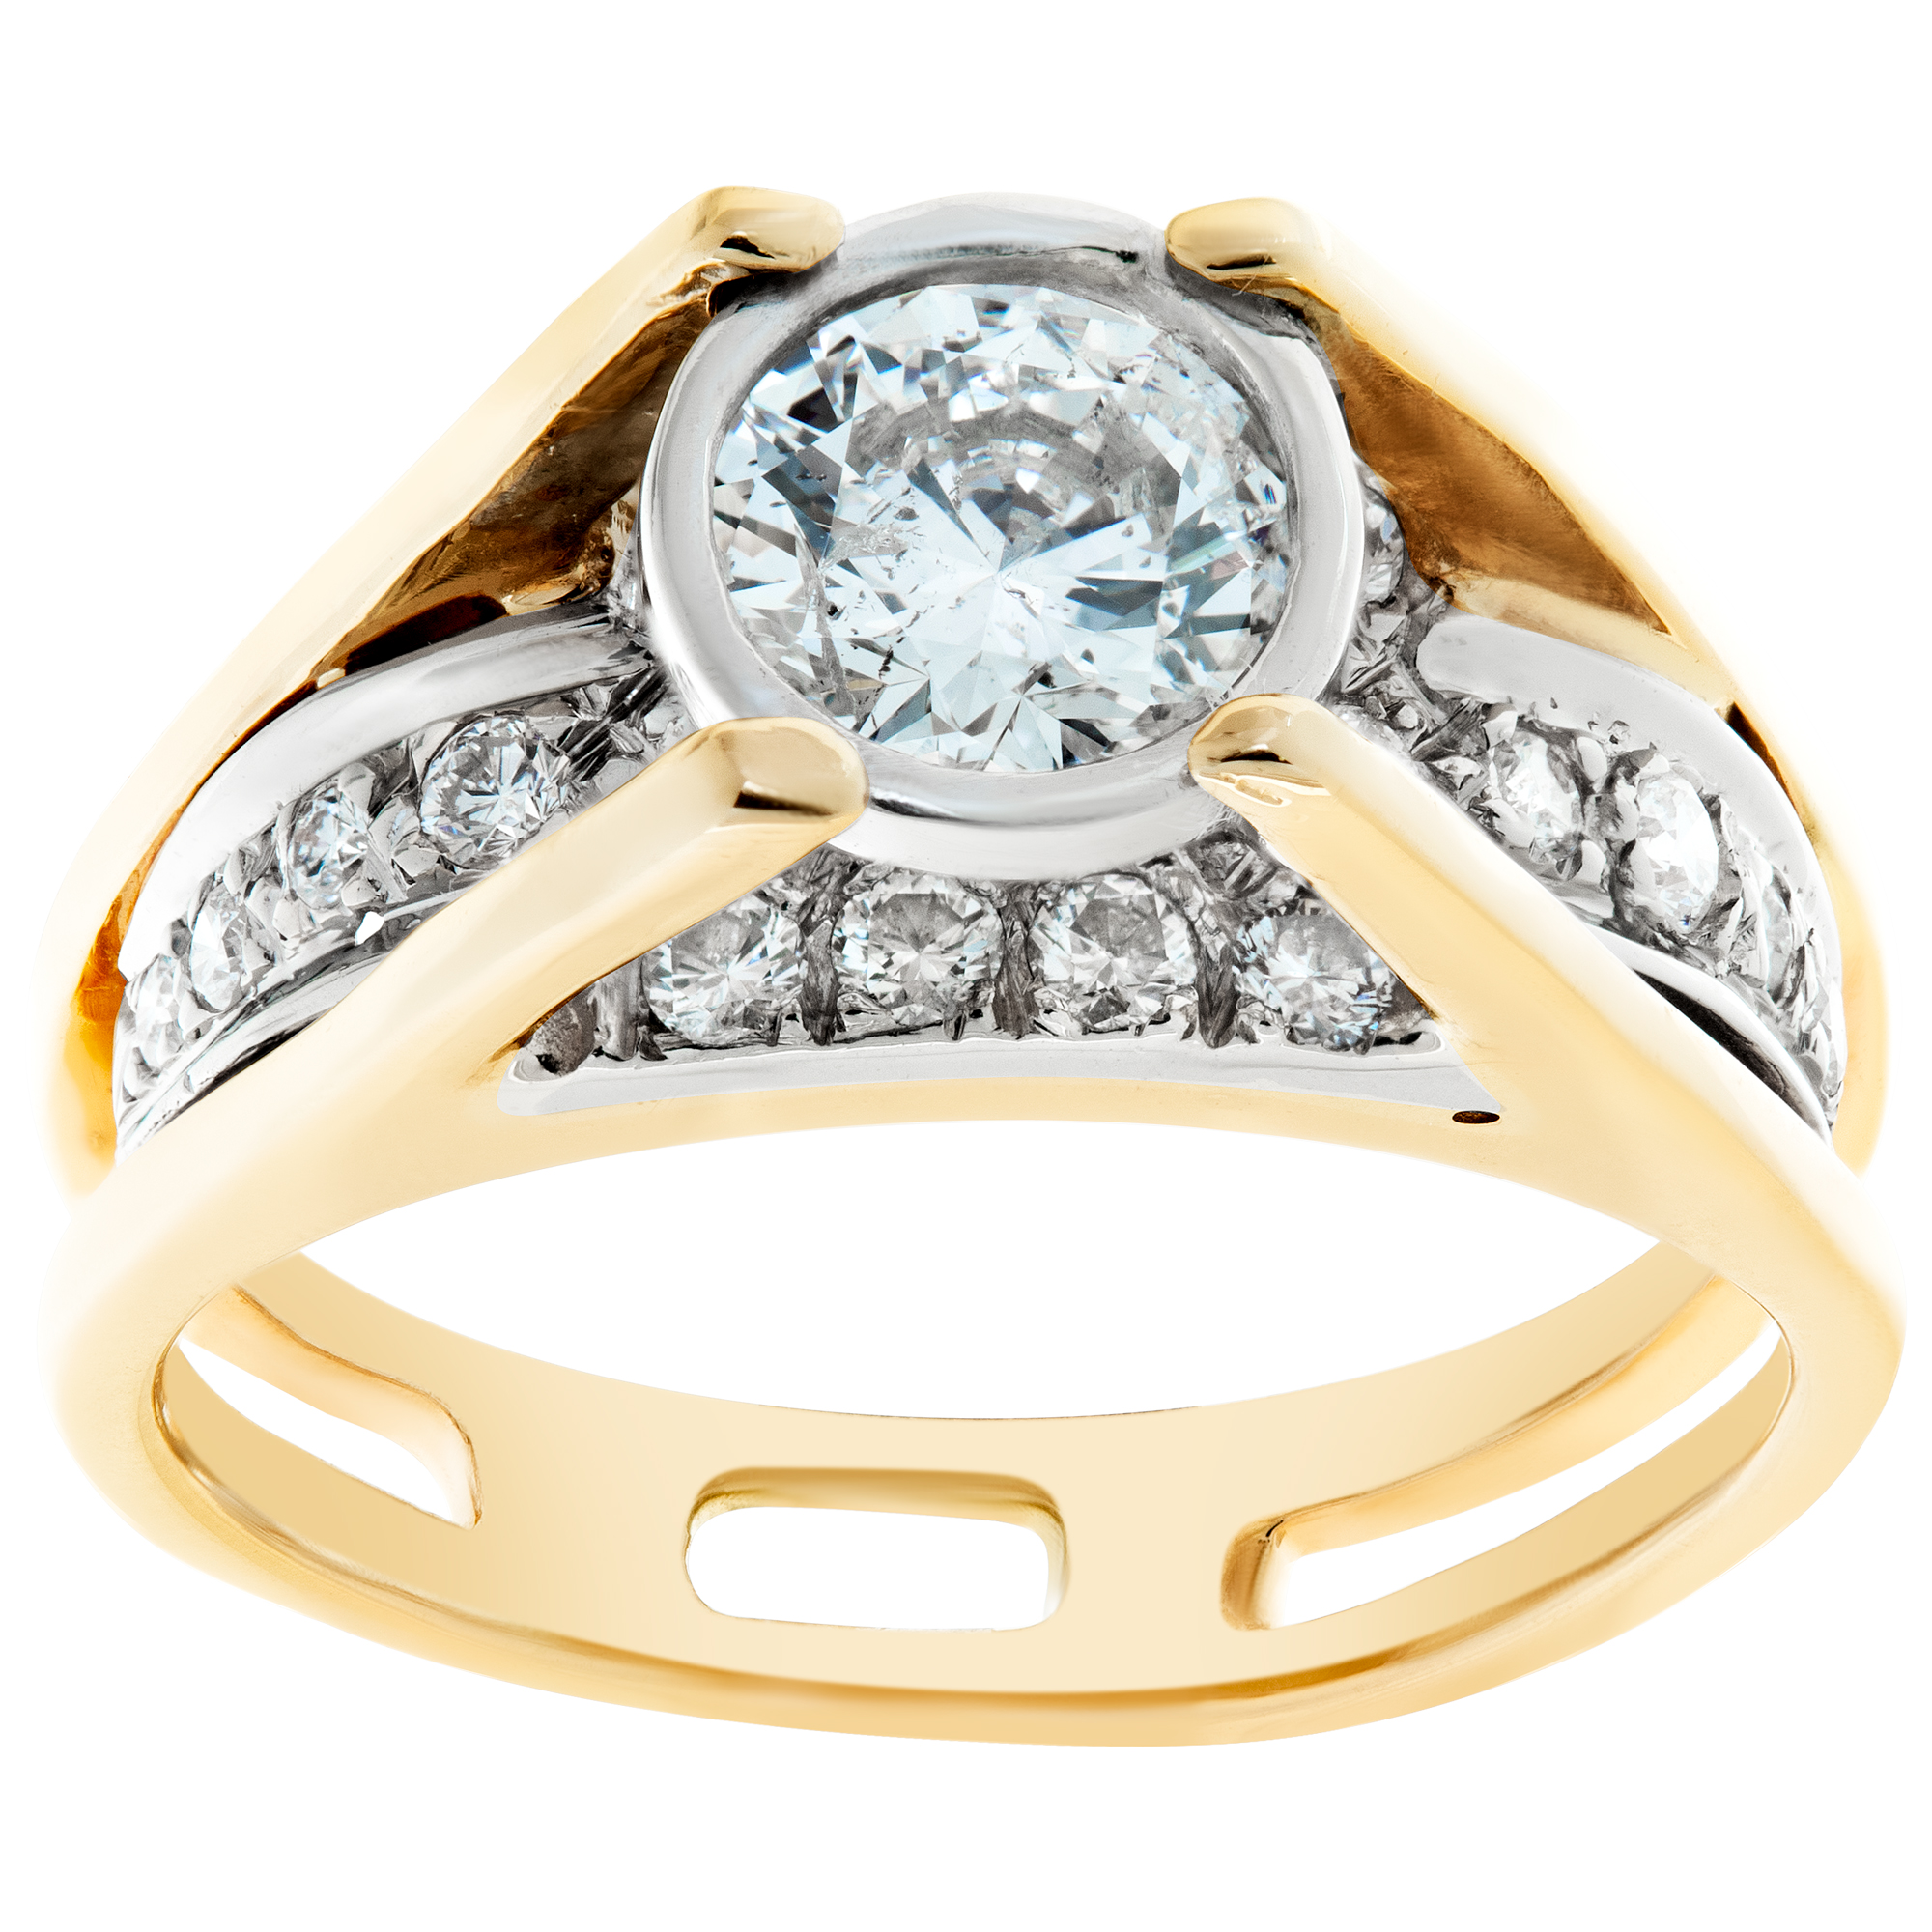 Bezel set approx. 0.65 carat H-I color, SI-I clarity diamond ring